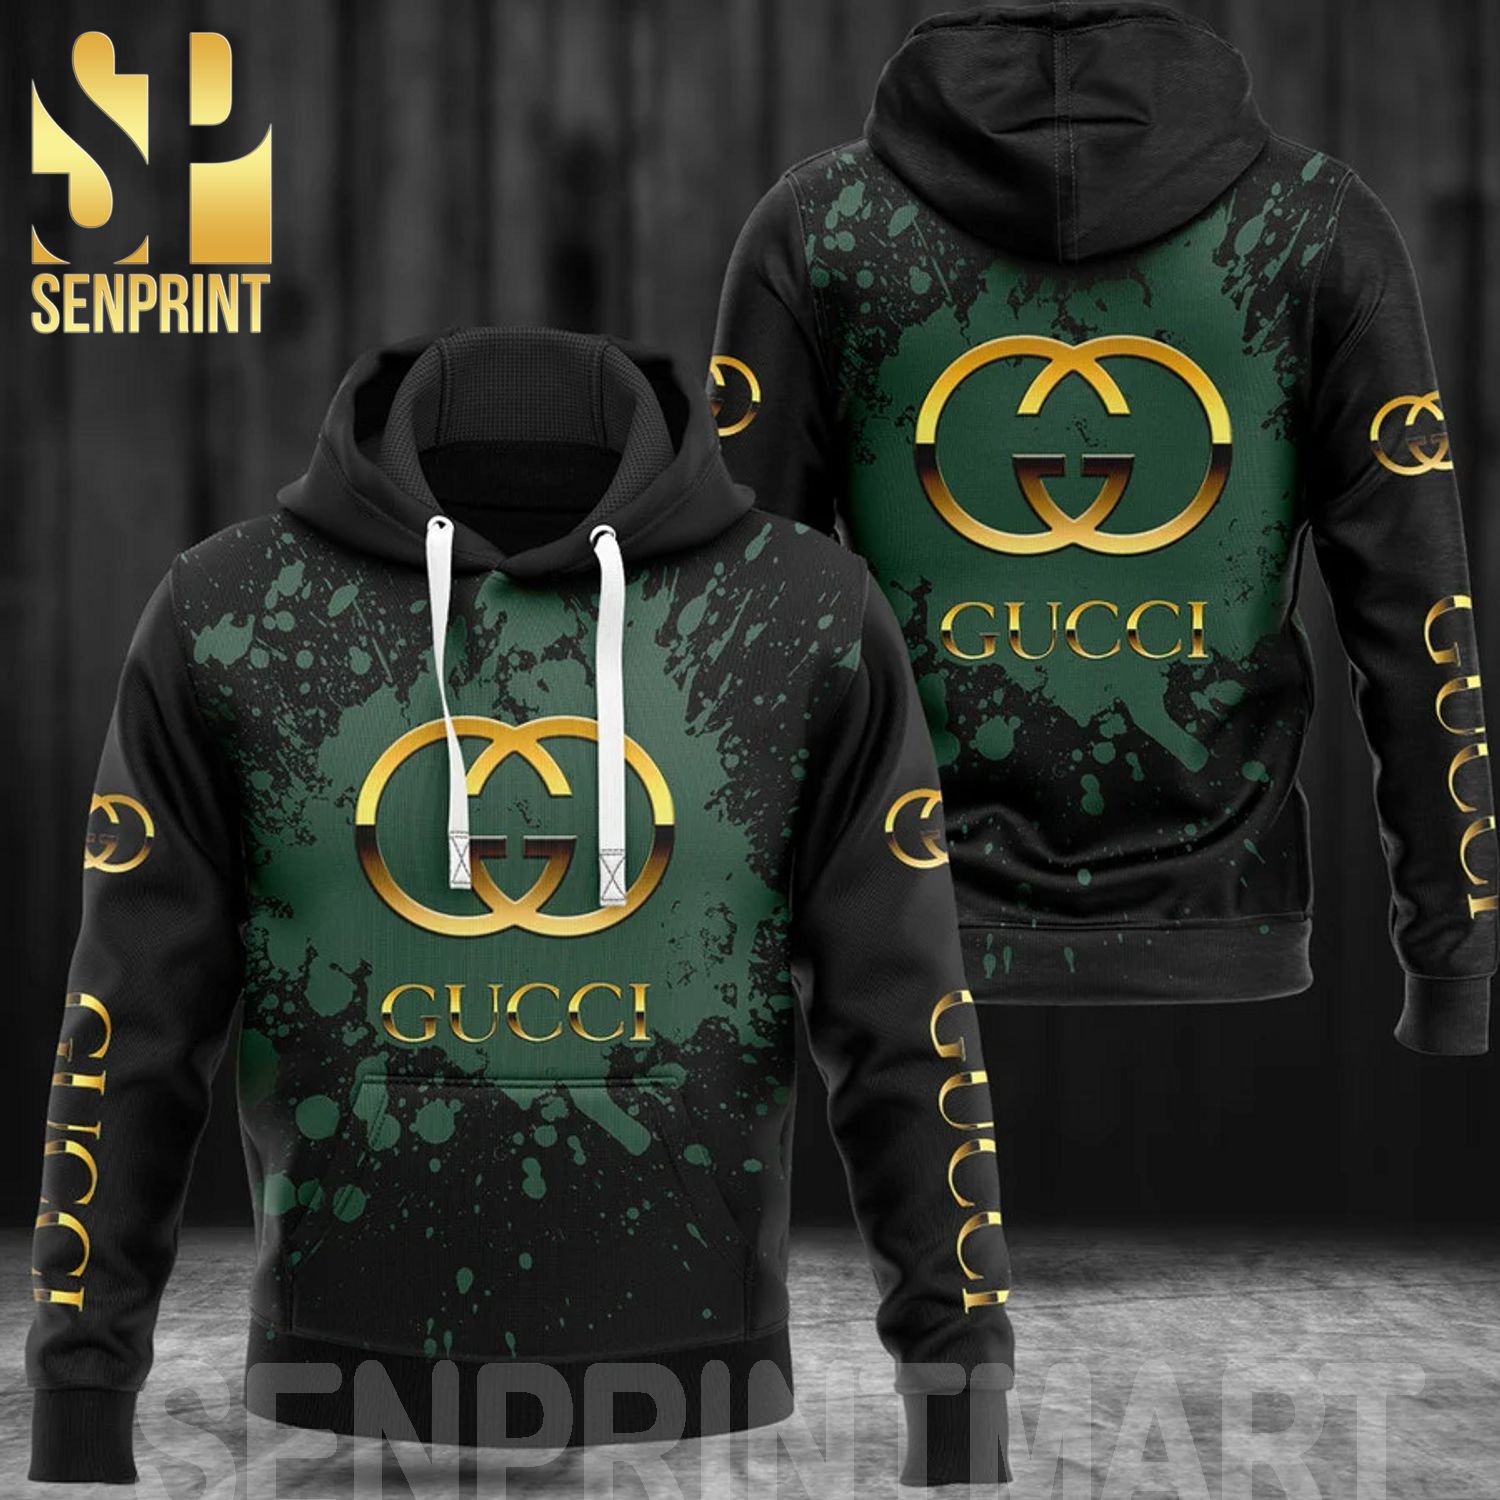 functie Uitstekend Concreet Gucci Symbol Luxury Branding All Over Print Shirt - Senprintmart Store